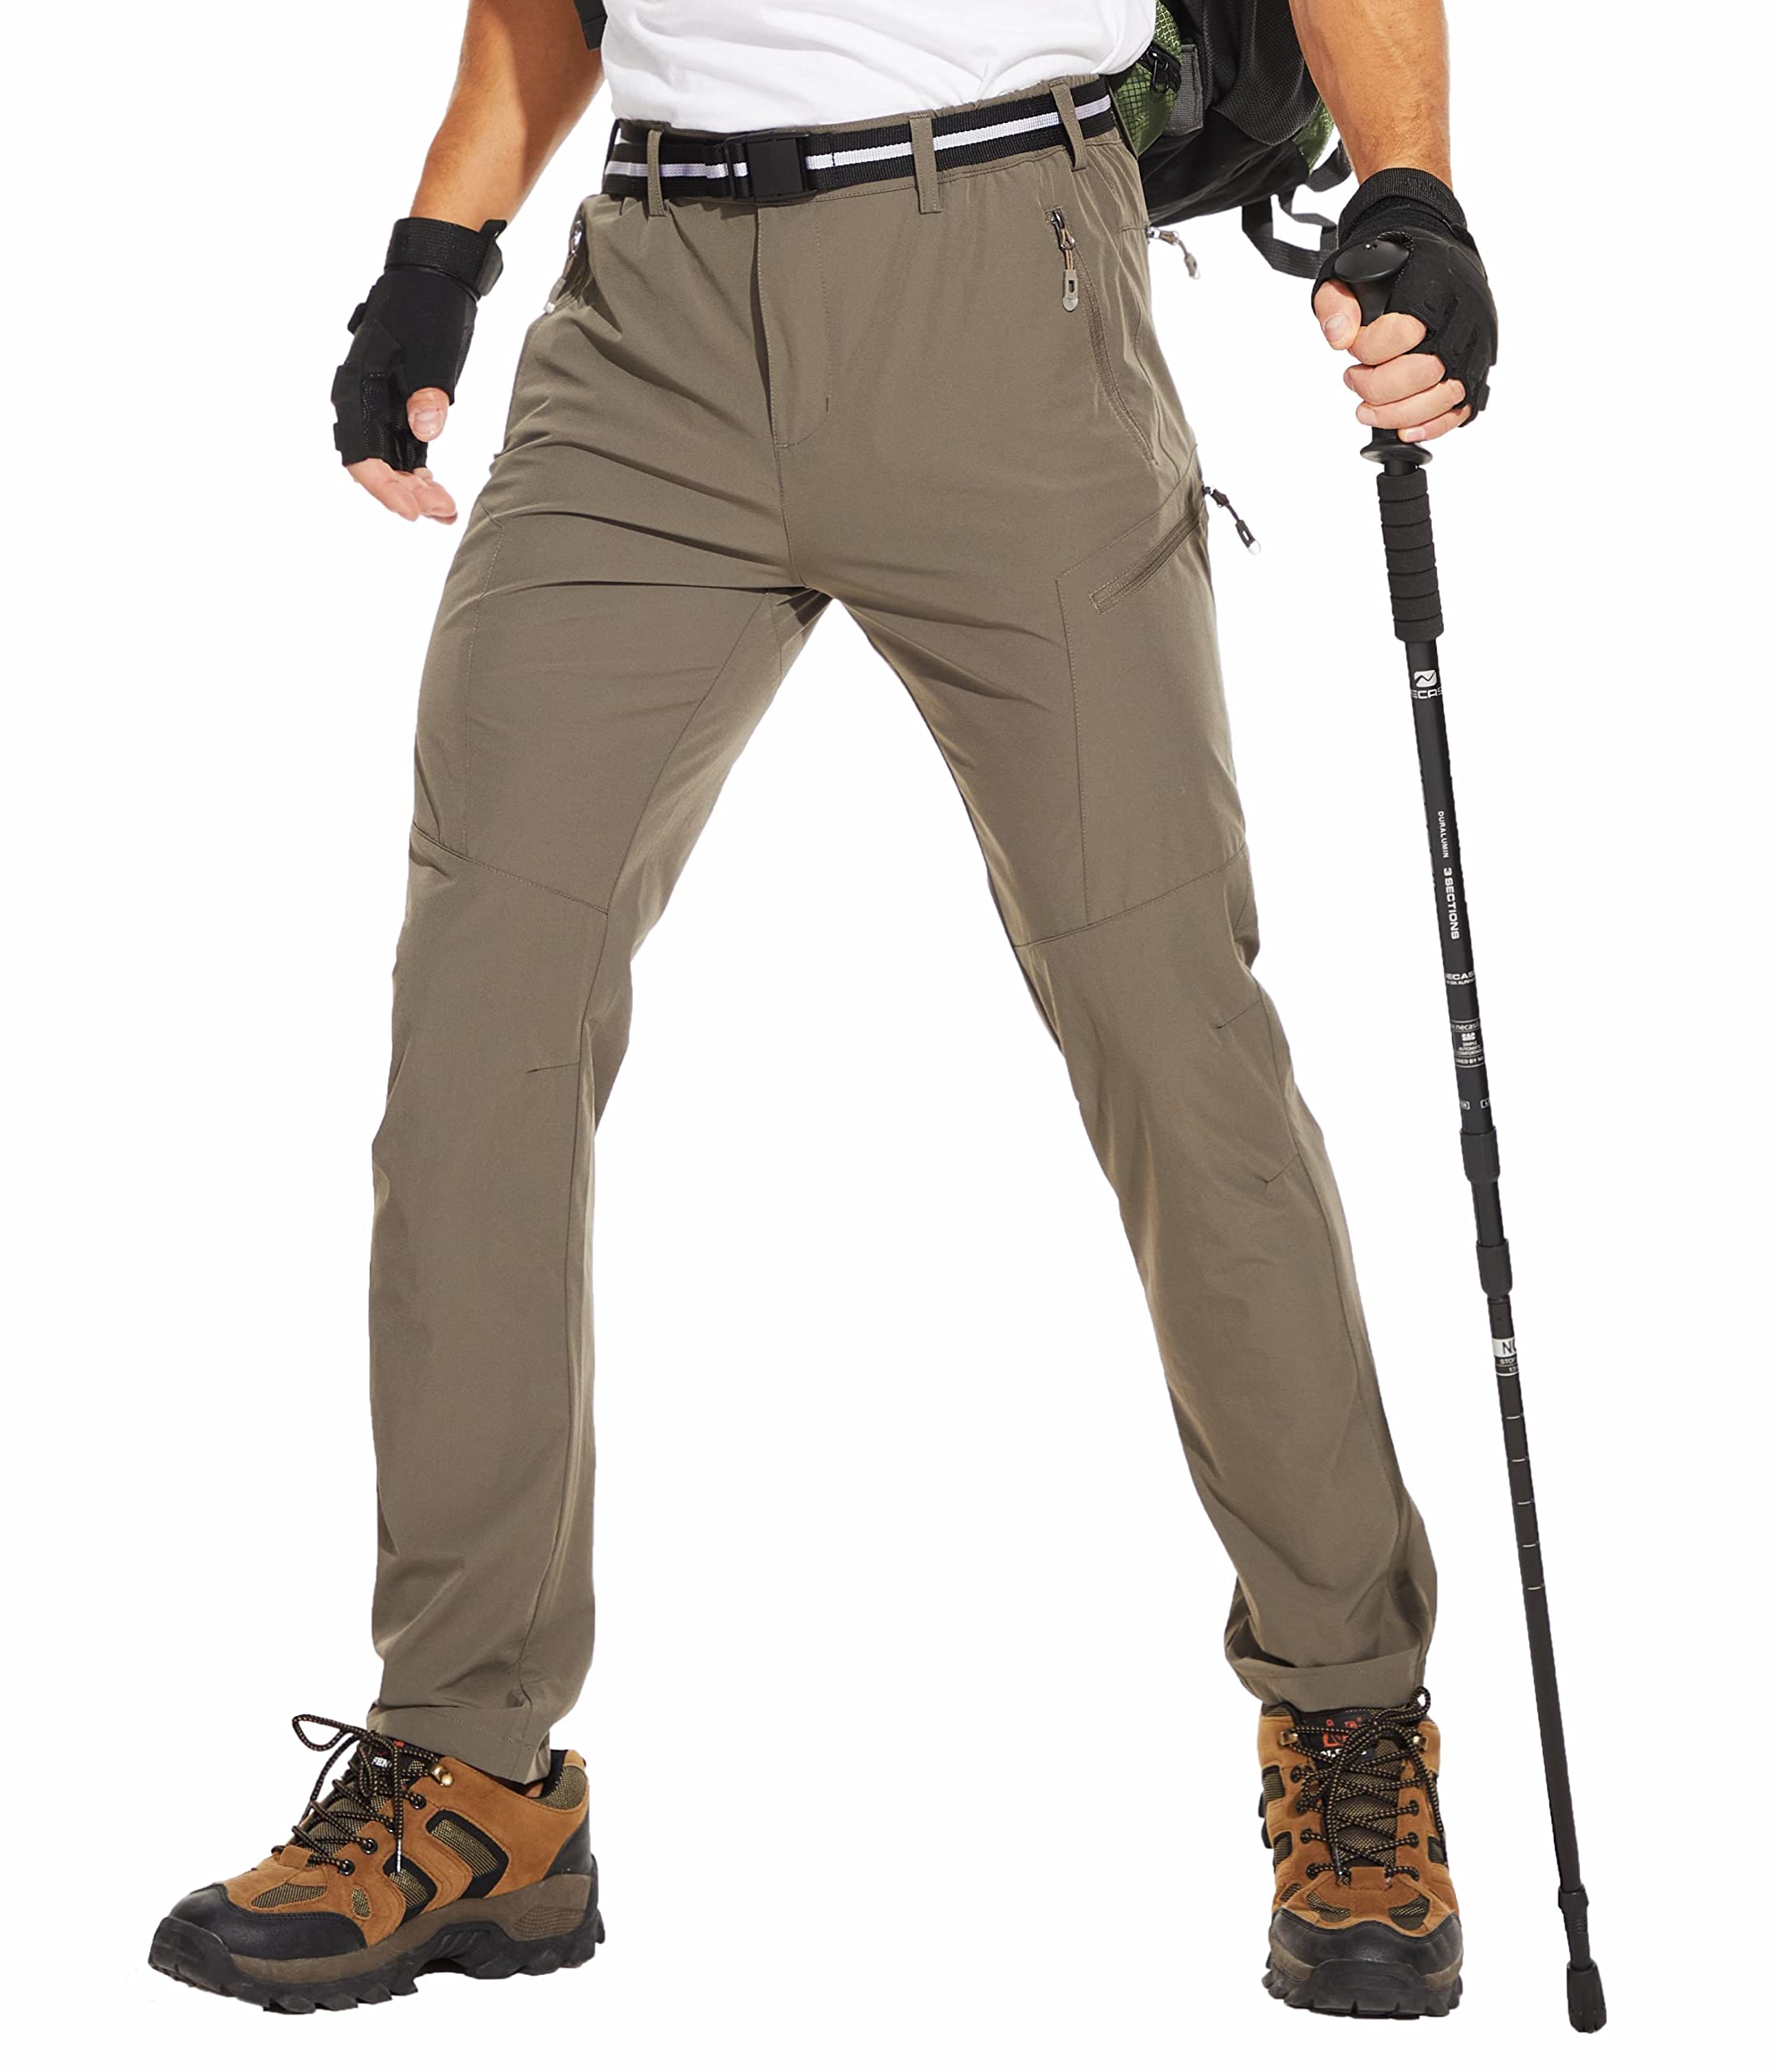 NATUVENIX Hiking Pants for Men, Quick Dry Travel Pants Men for